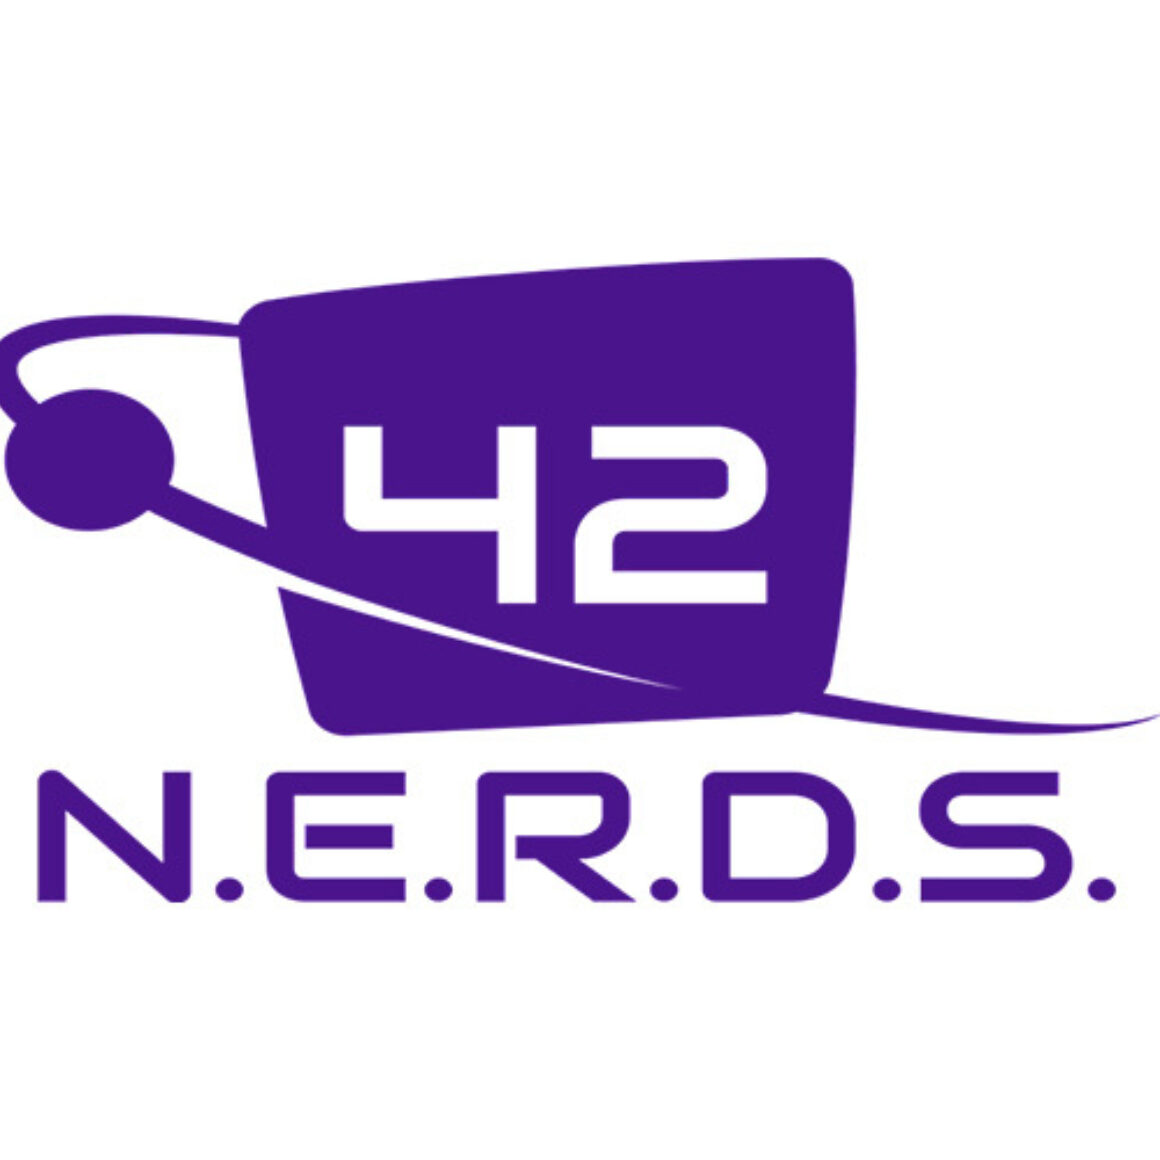 42 nerds